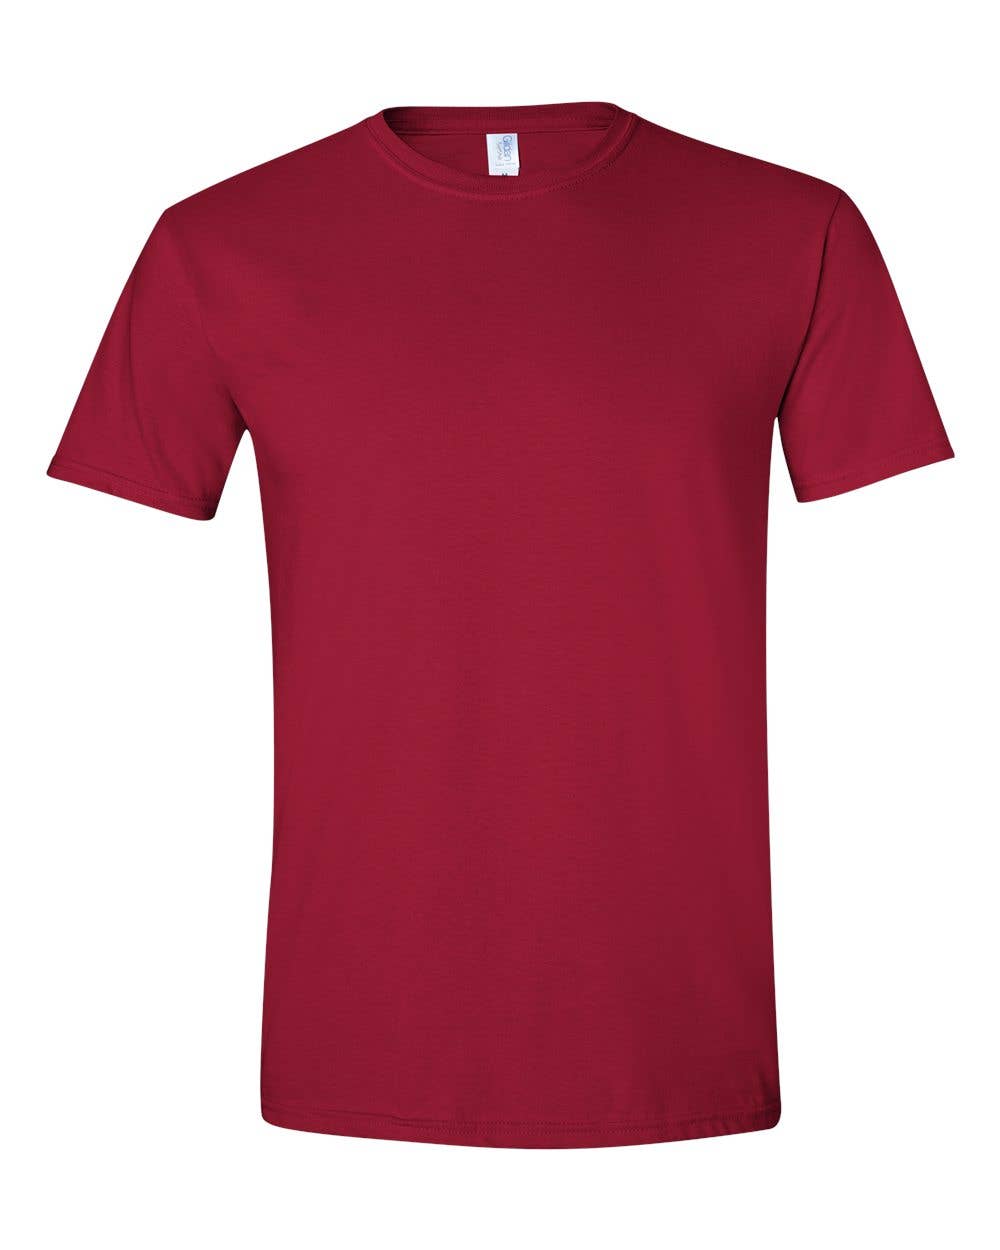 Gildan Soft Adult Shirt, Blank Unisex T-shirt: XL / White